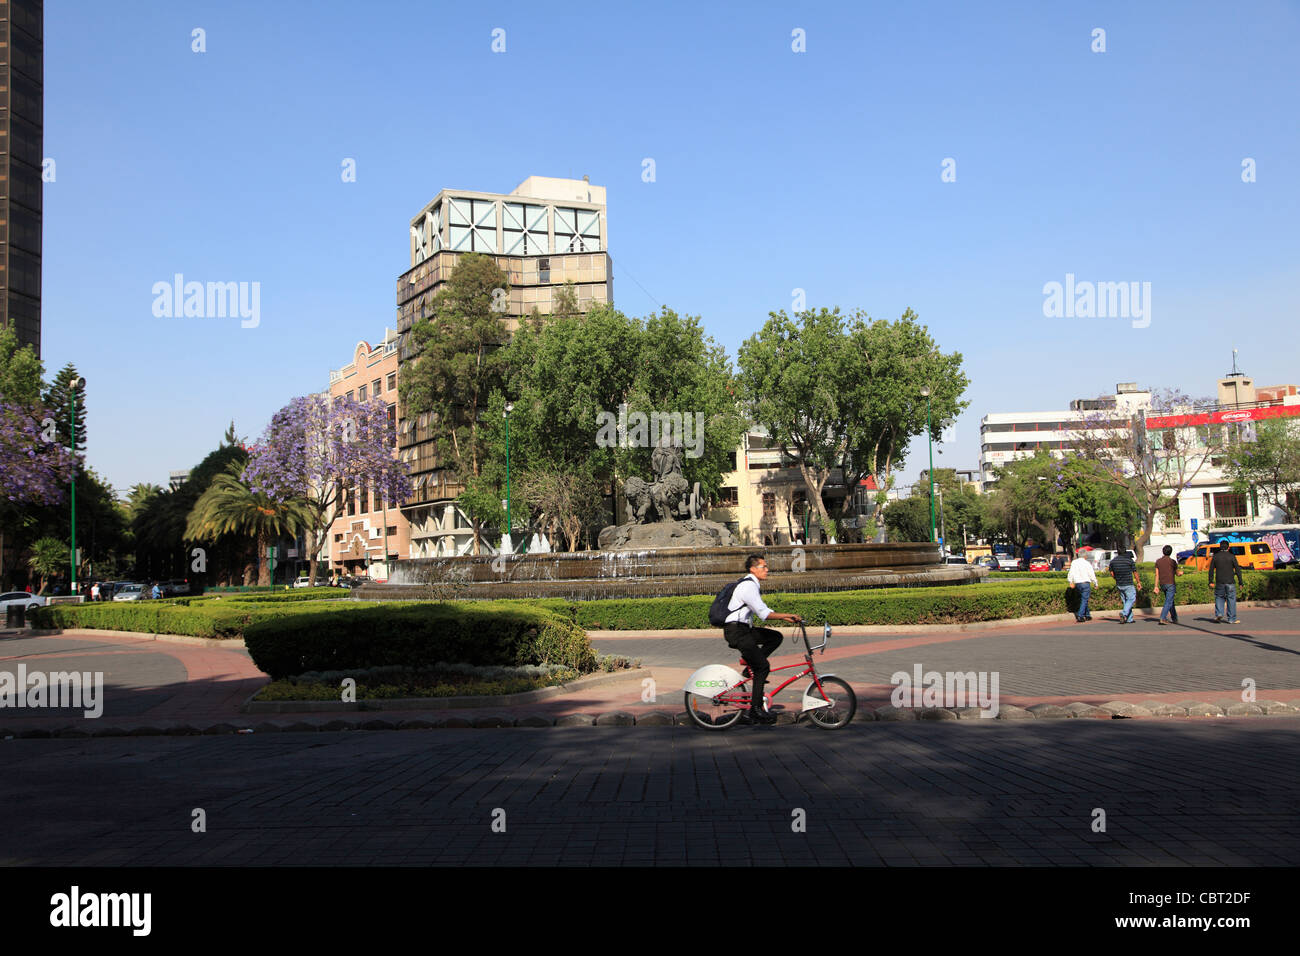 Madrid Plaza, Colonia Roma, trendy neighborhood, Mexico City, Mexico, North America Stock Photo